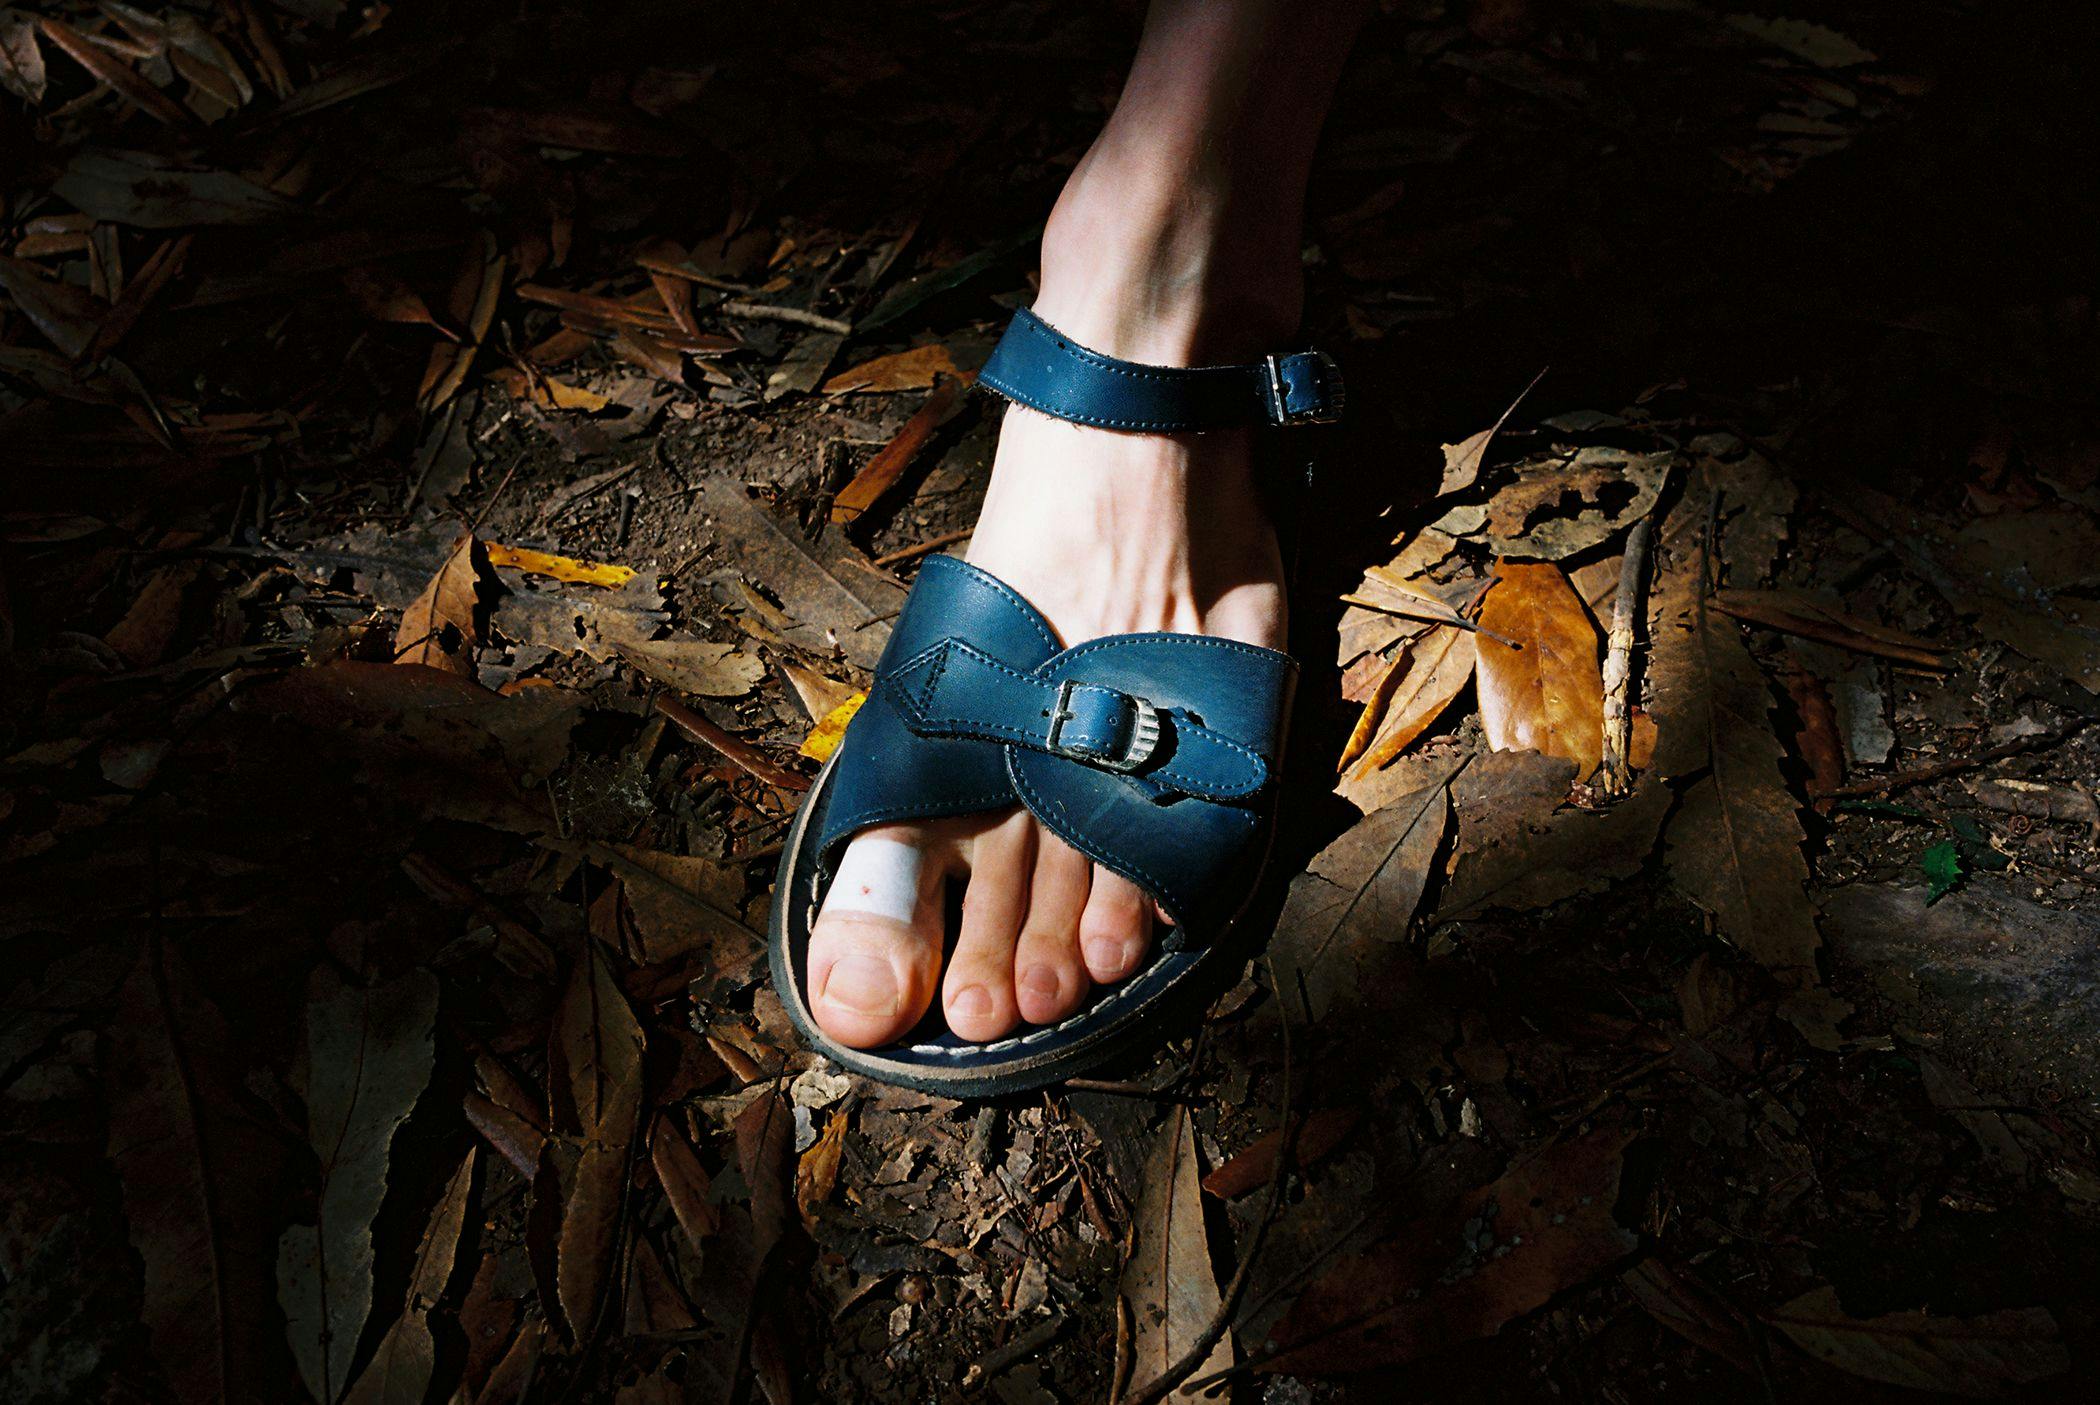 'Roman Sandals, Wainuiomata' by Natasha Cantwell, C-Type Photograph, Edition of 5